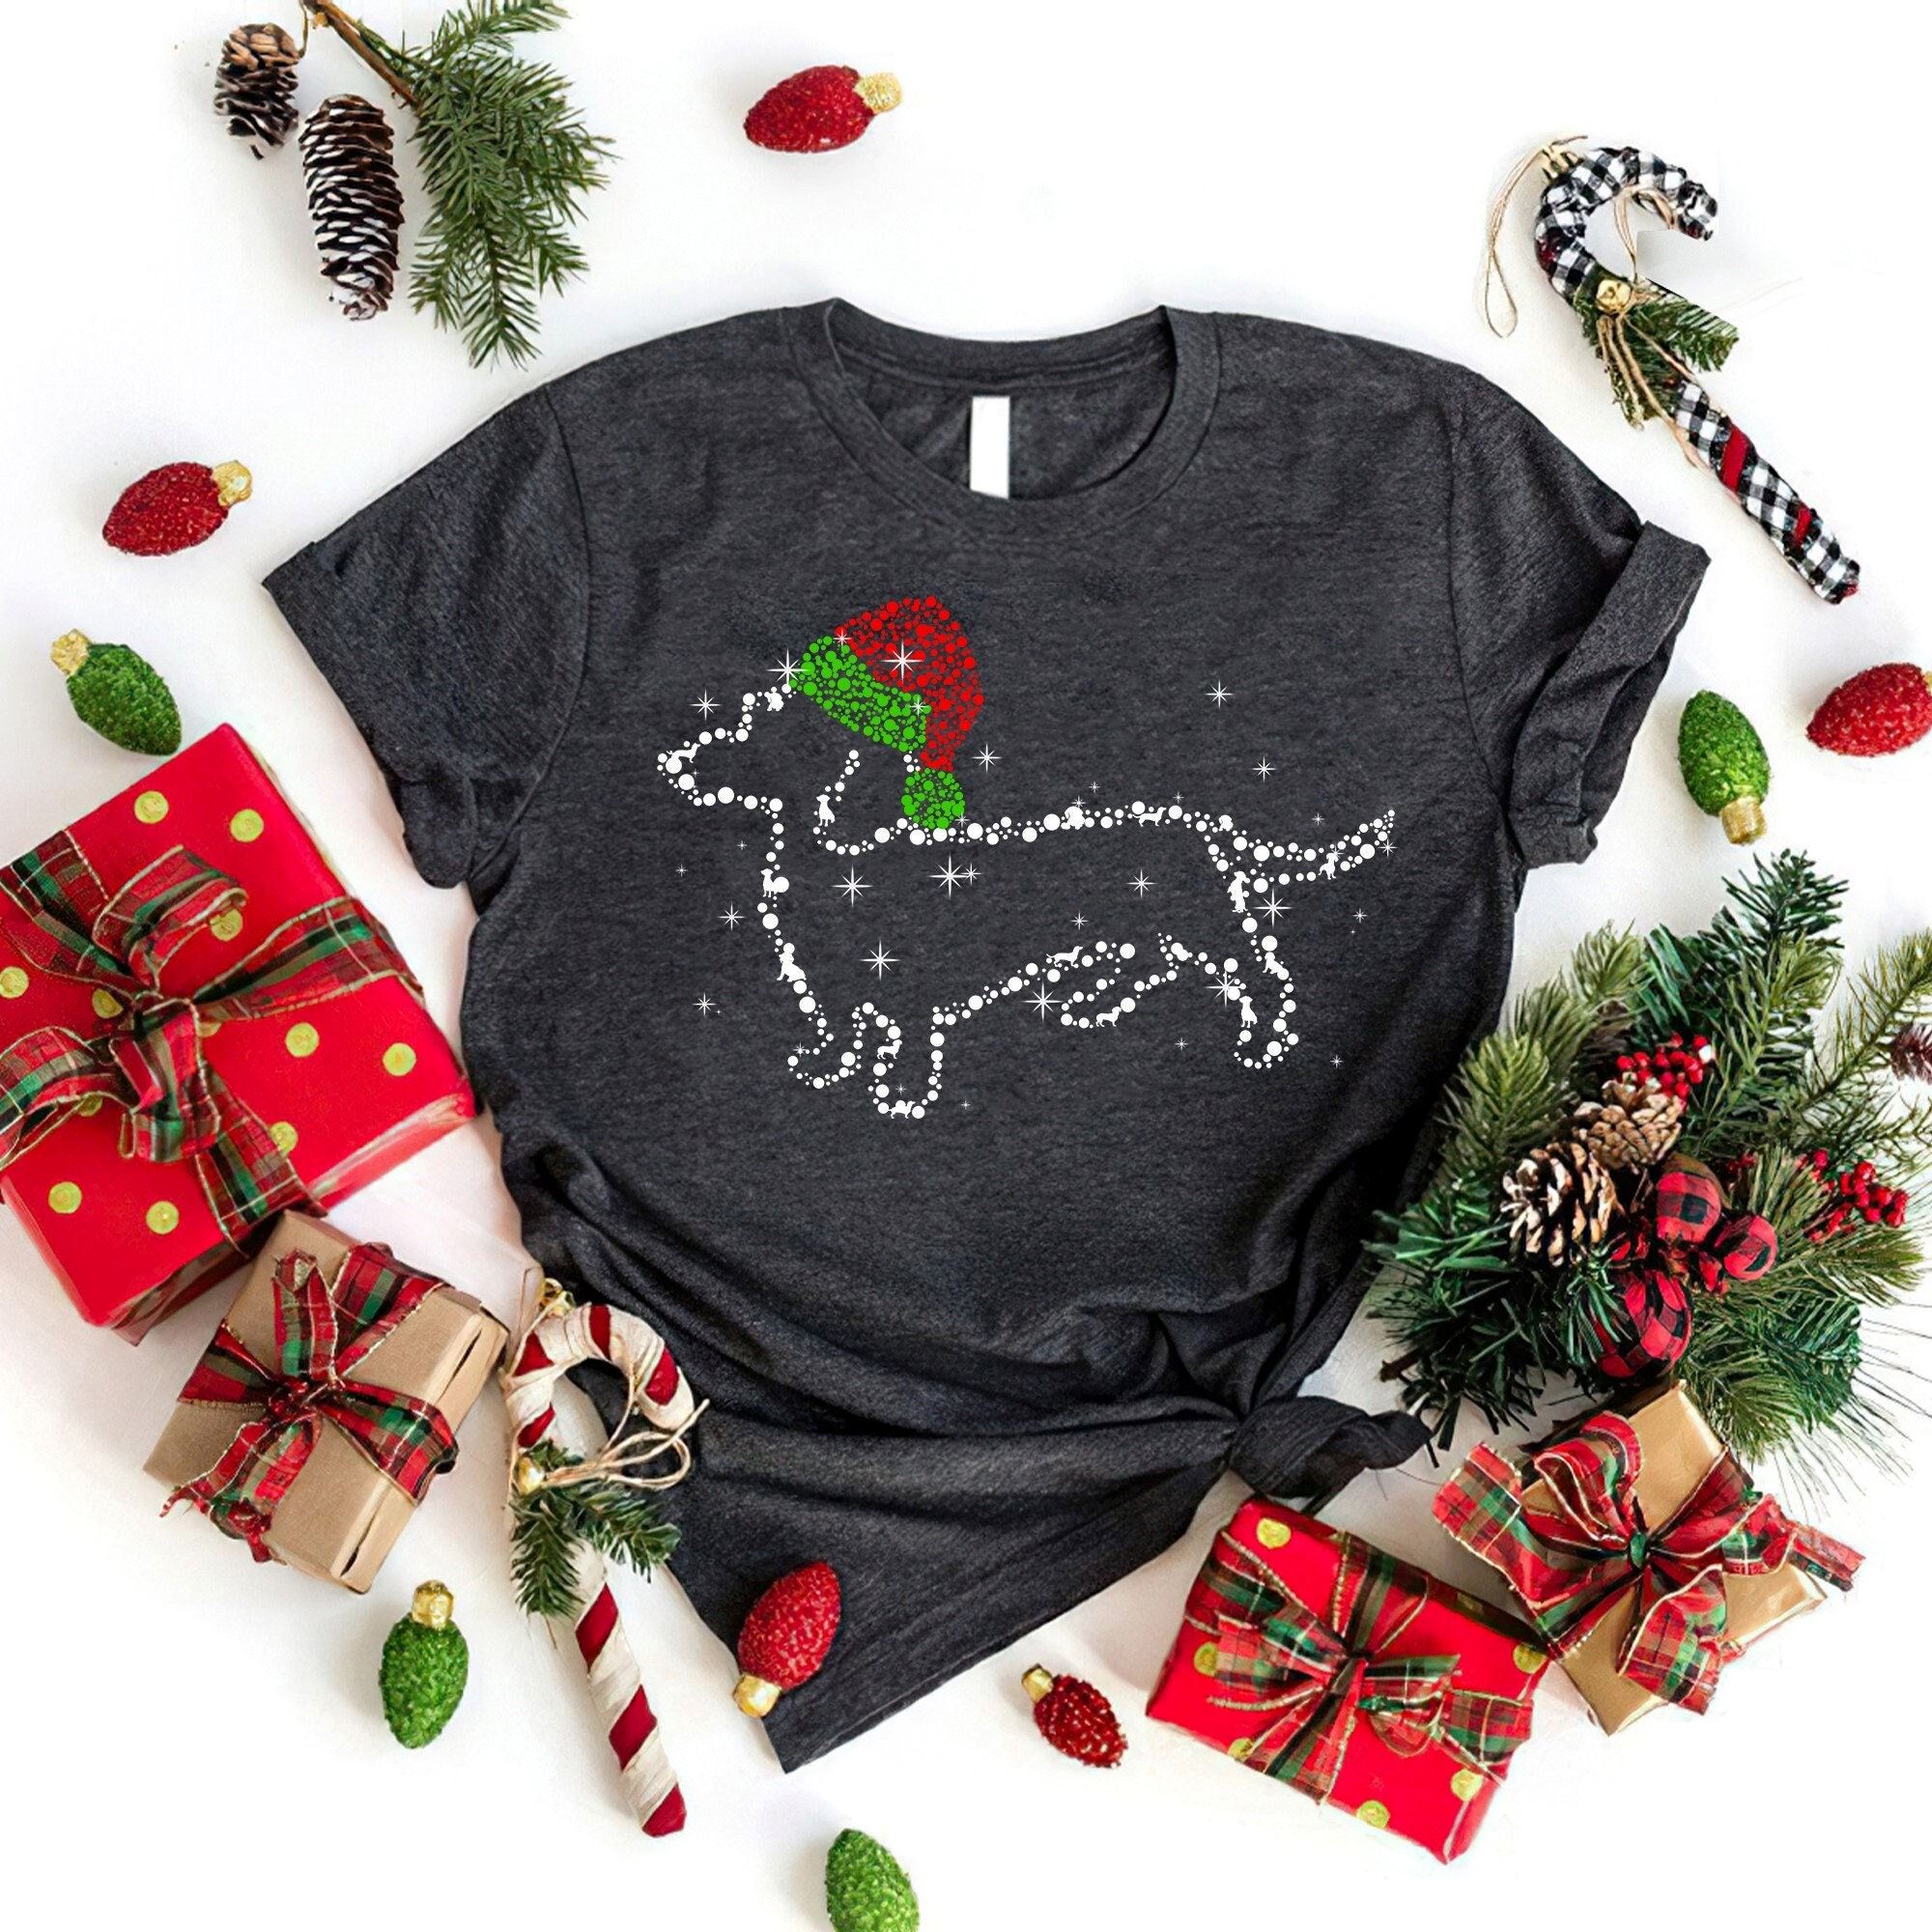 Gifts Dachshund Christmas Shirt Dachshund Shirt Christmas Shirt Cute Dachshund Lover Gift 